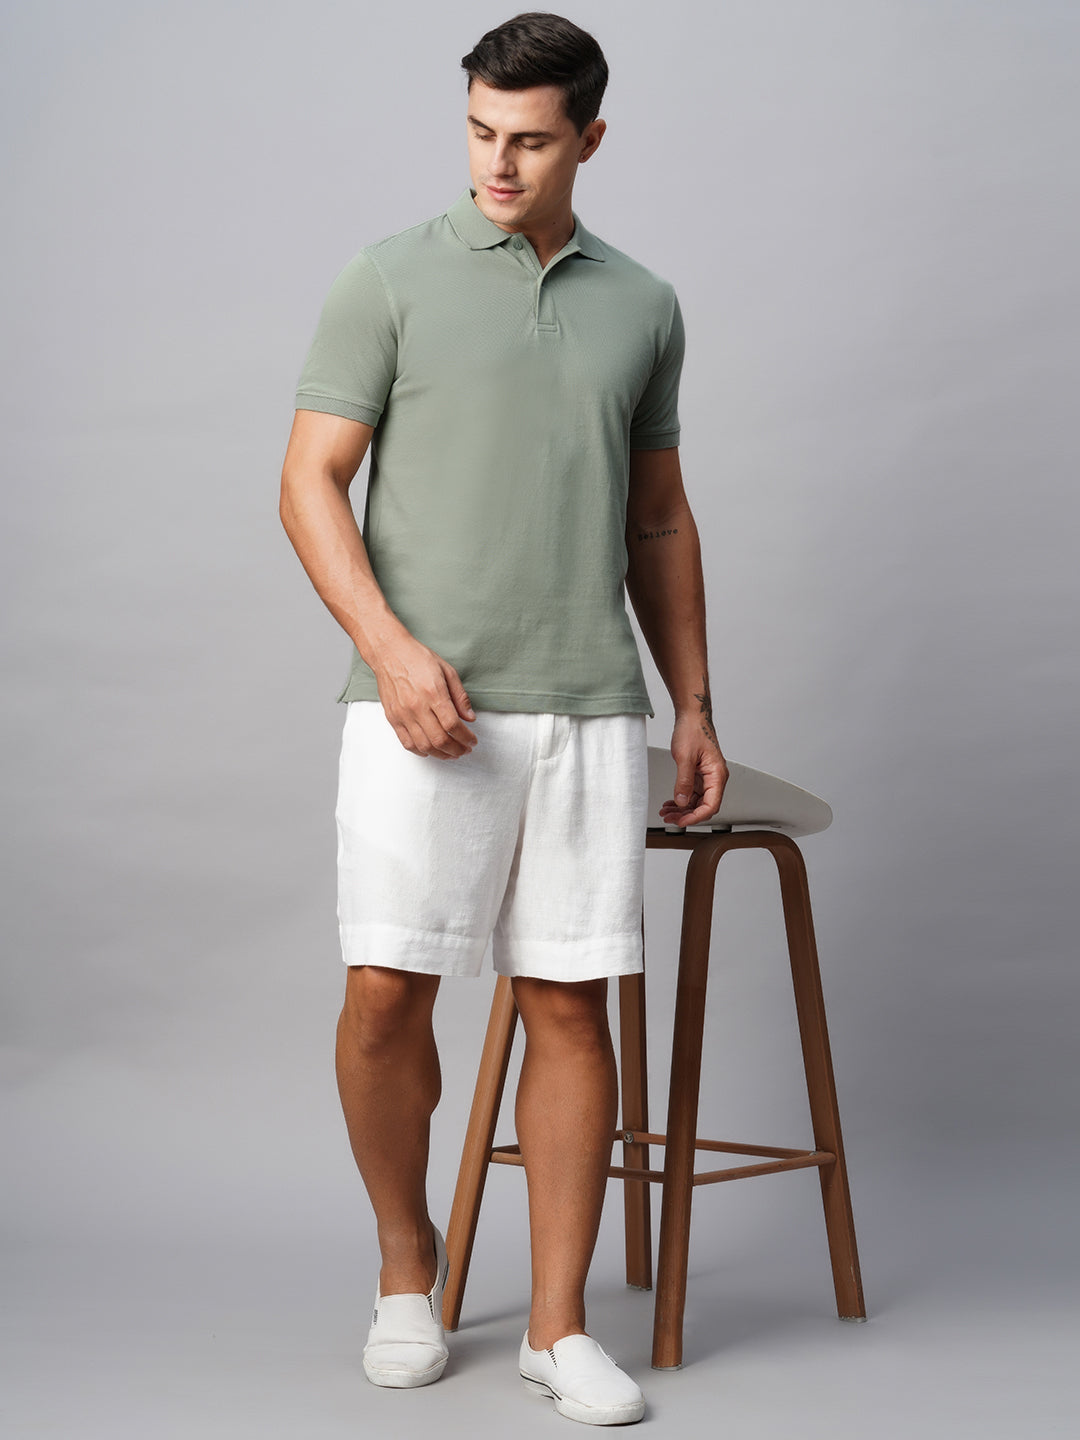 Men's Polo 100% Cotton Green Regular Fit